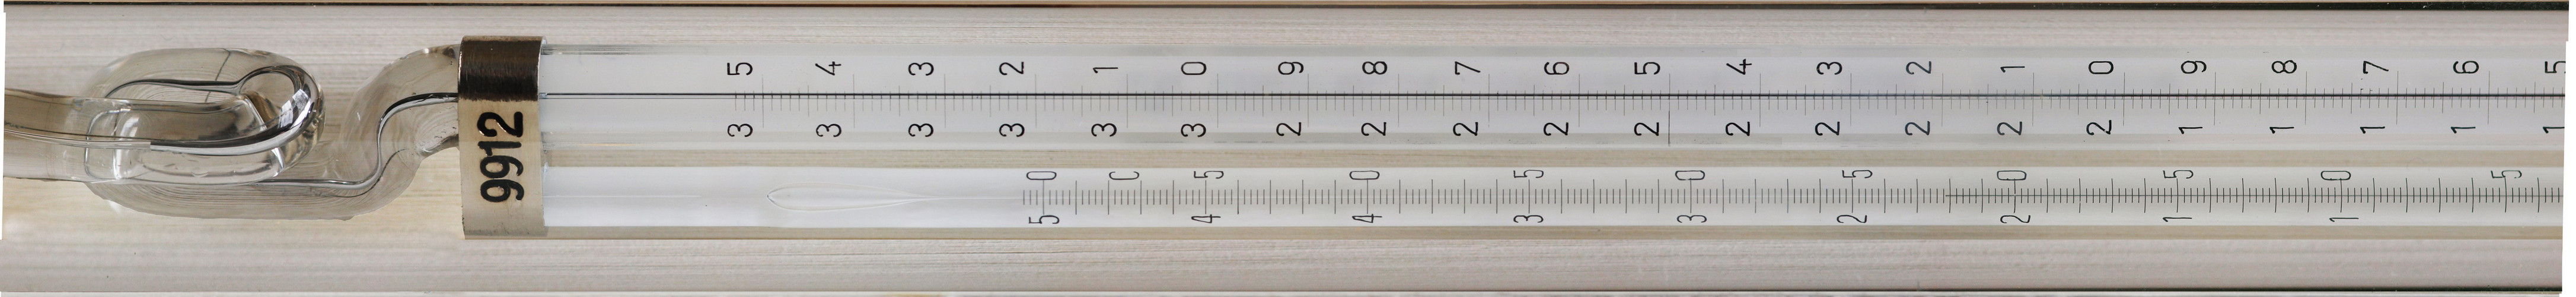 Thermometerskala eines Tiefsee-Umkippthermometers